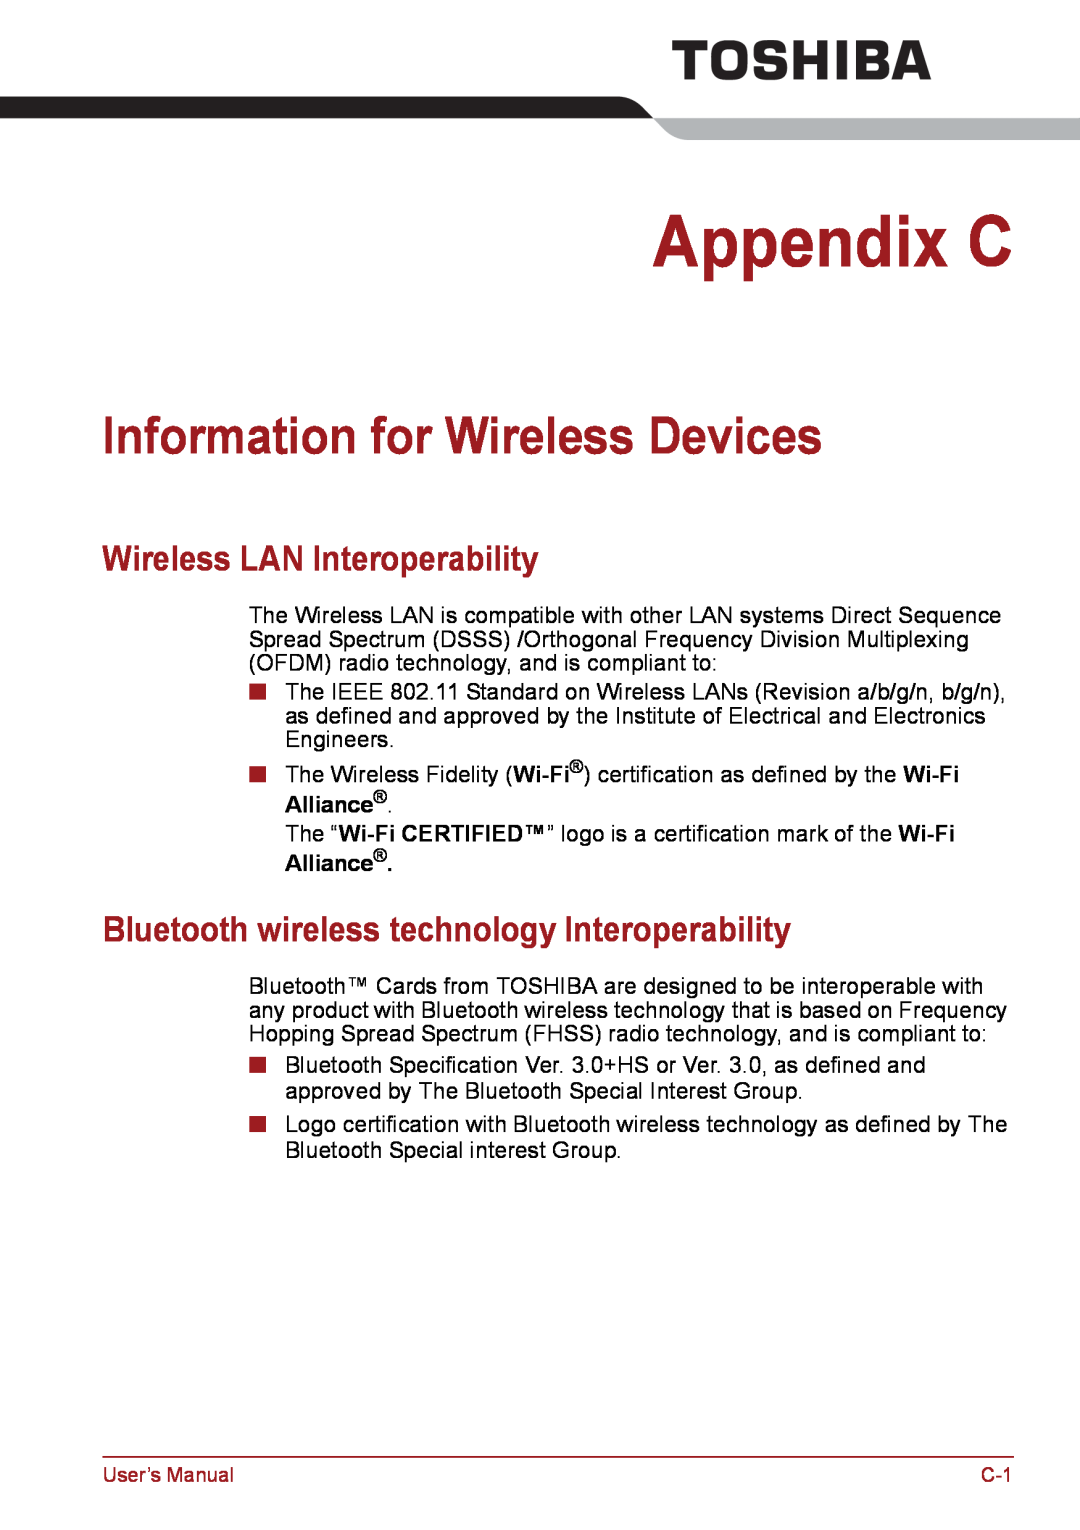 Toshiba PSC08U-02D01D user manual Appendix C, Information for Wireless Devices, Wireless LAN Interoperability, Alliance 